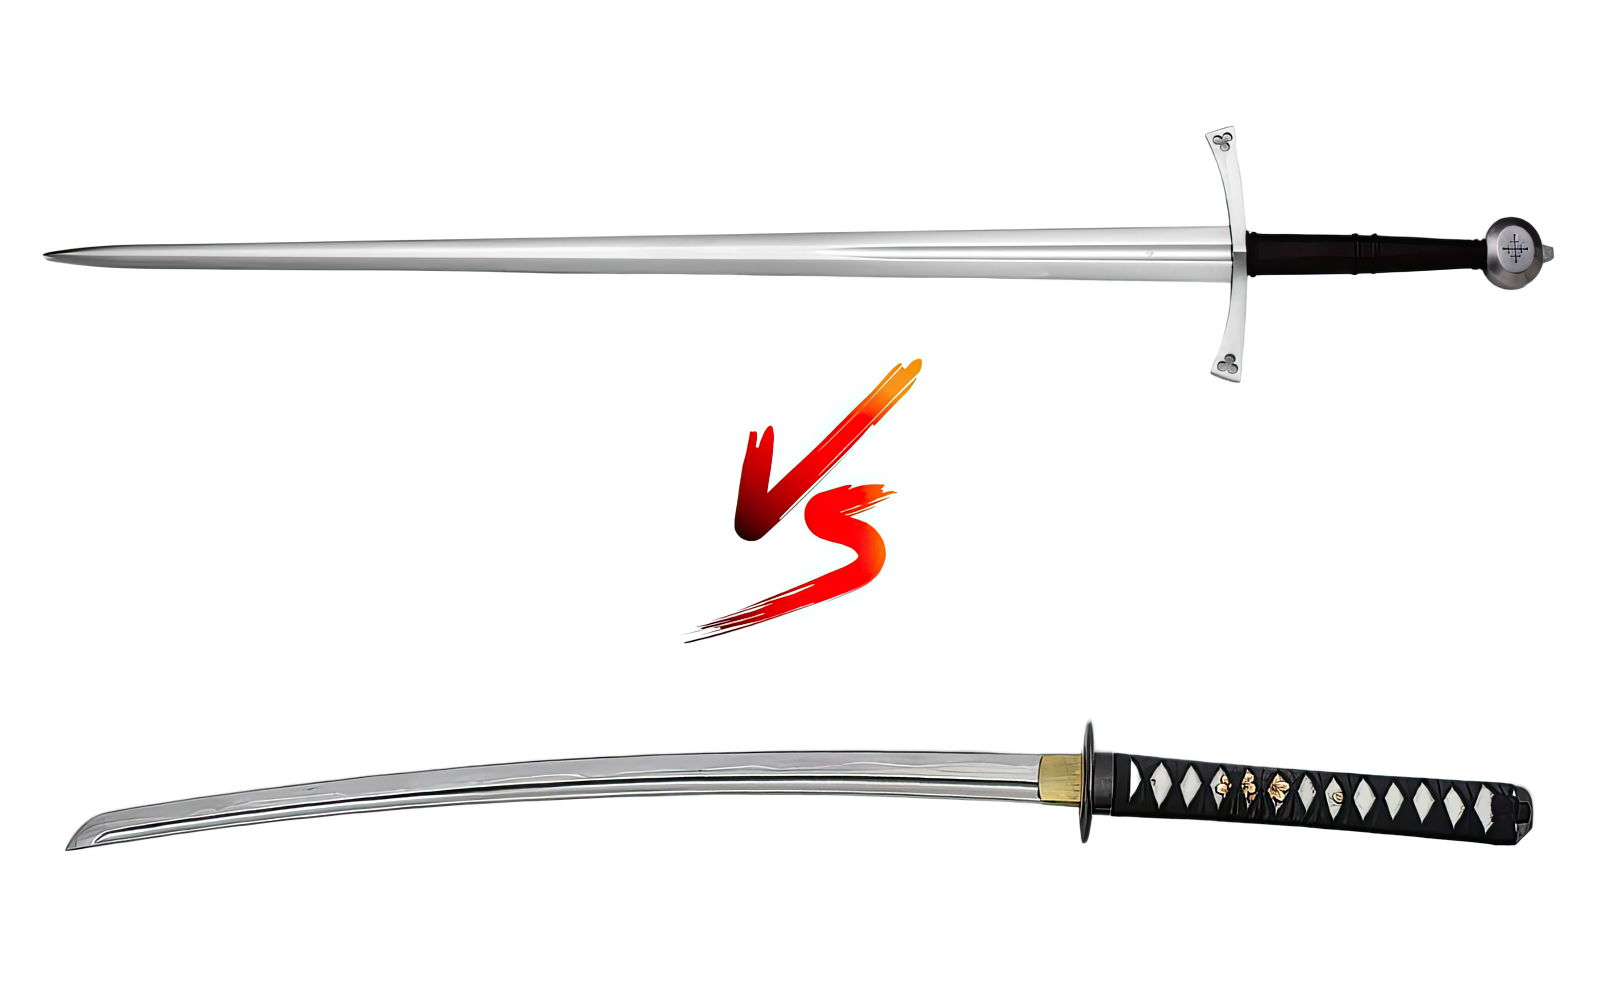 Samurai fashion guide – Should you wear your sword blade-up or